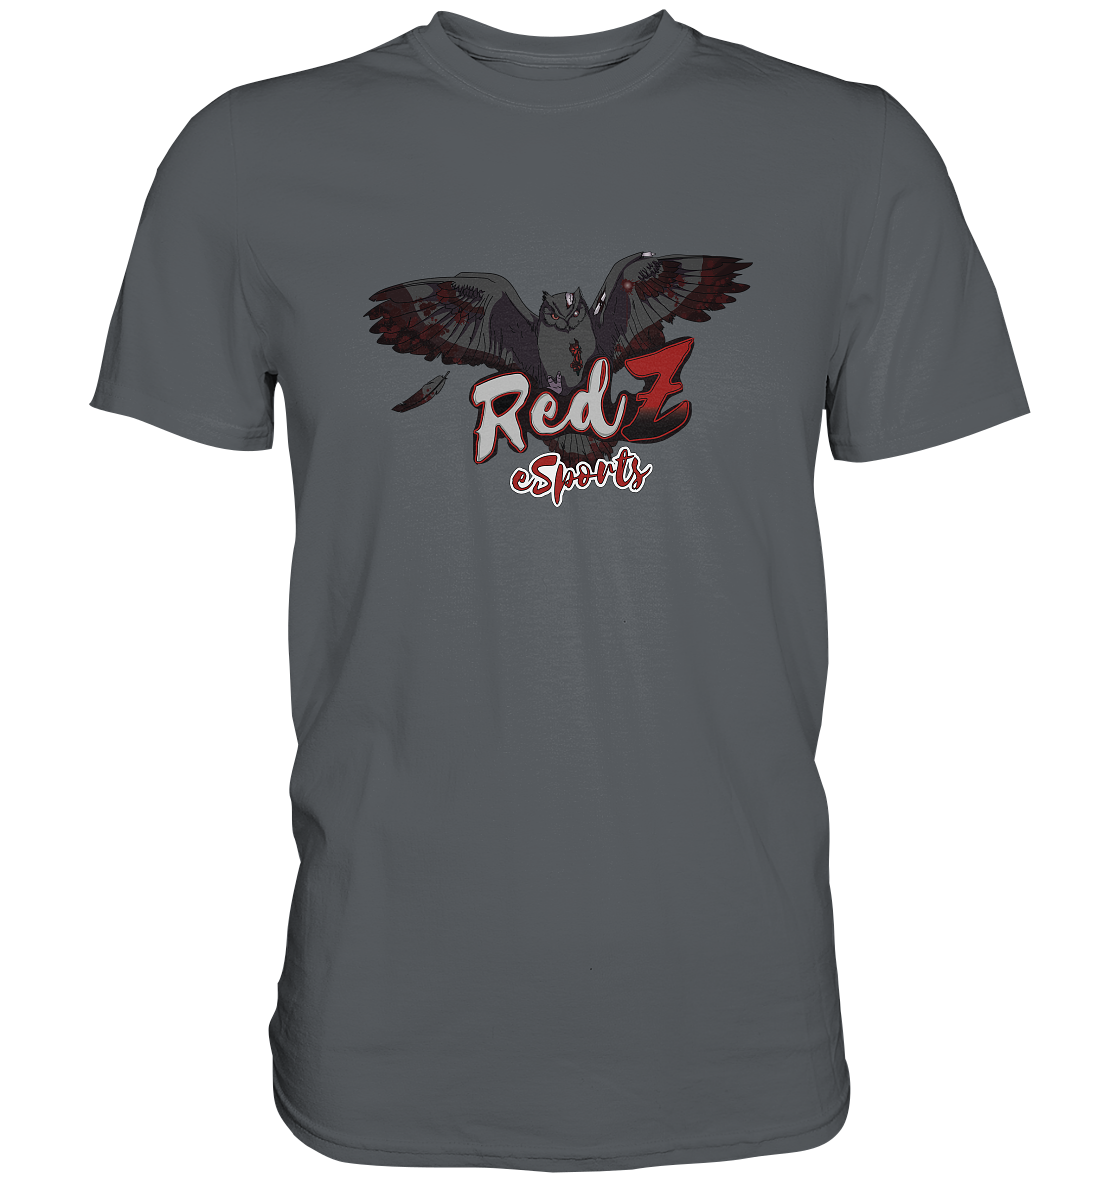 REDZ ESPORTS RED - Basic Shirt